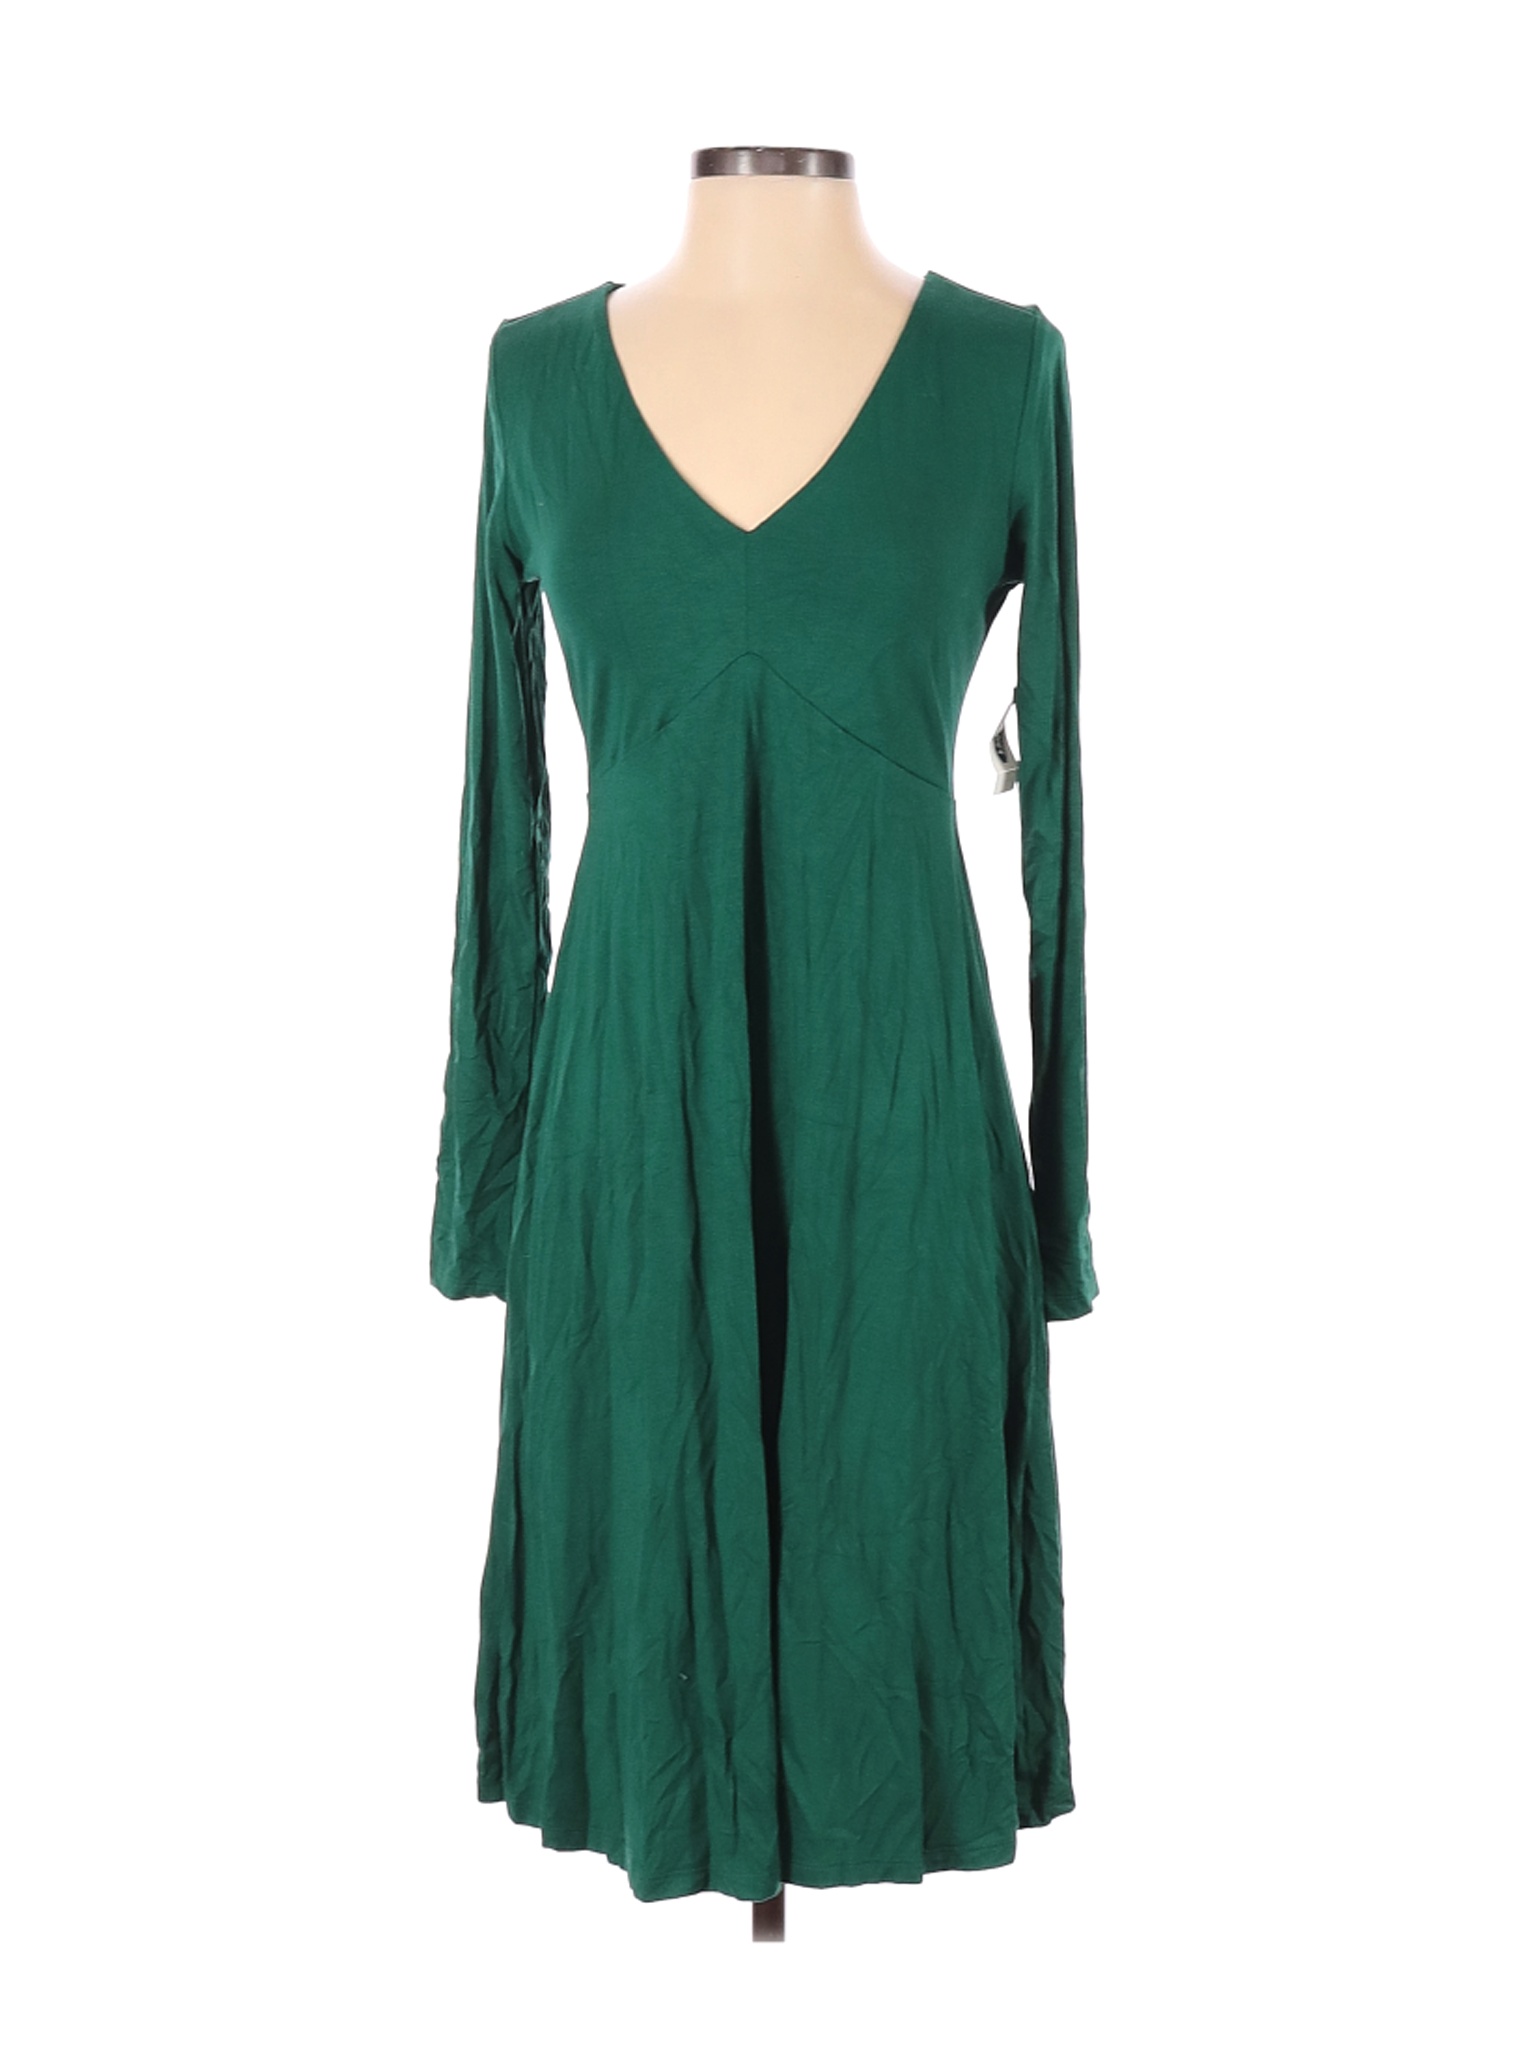 NWT Old Navy Women Green Casual Dress S | eBay